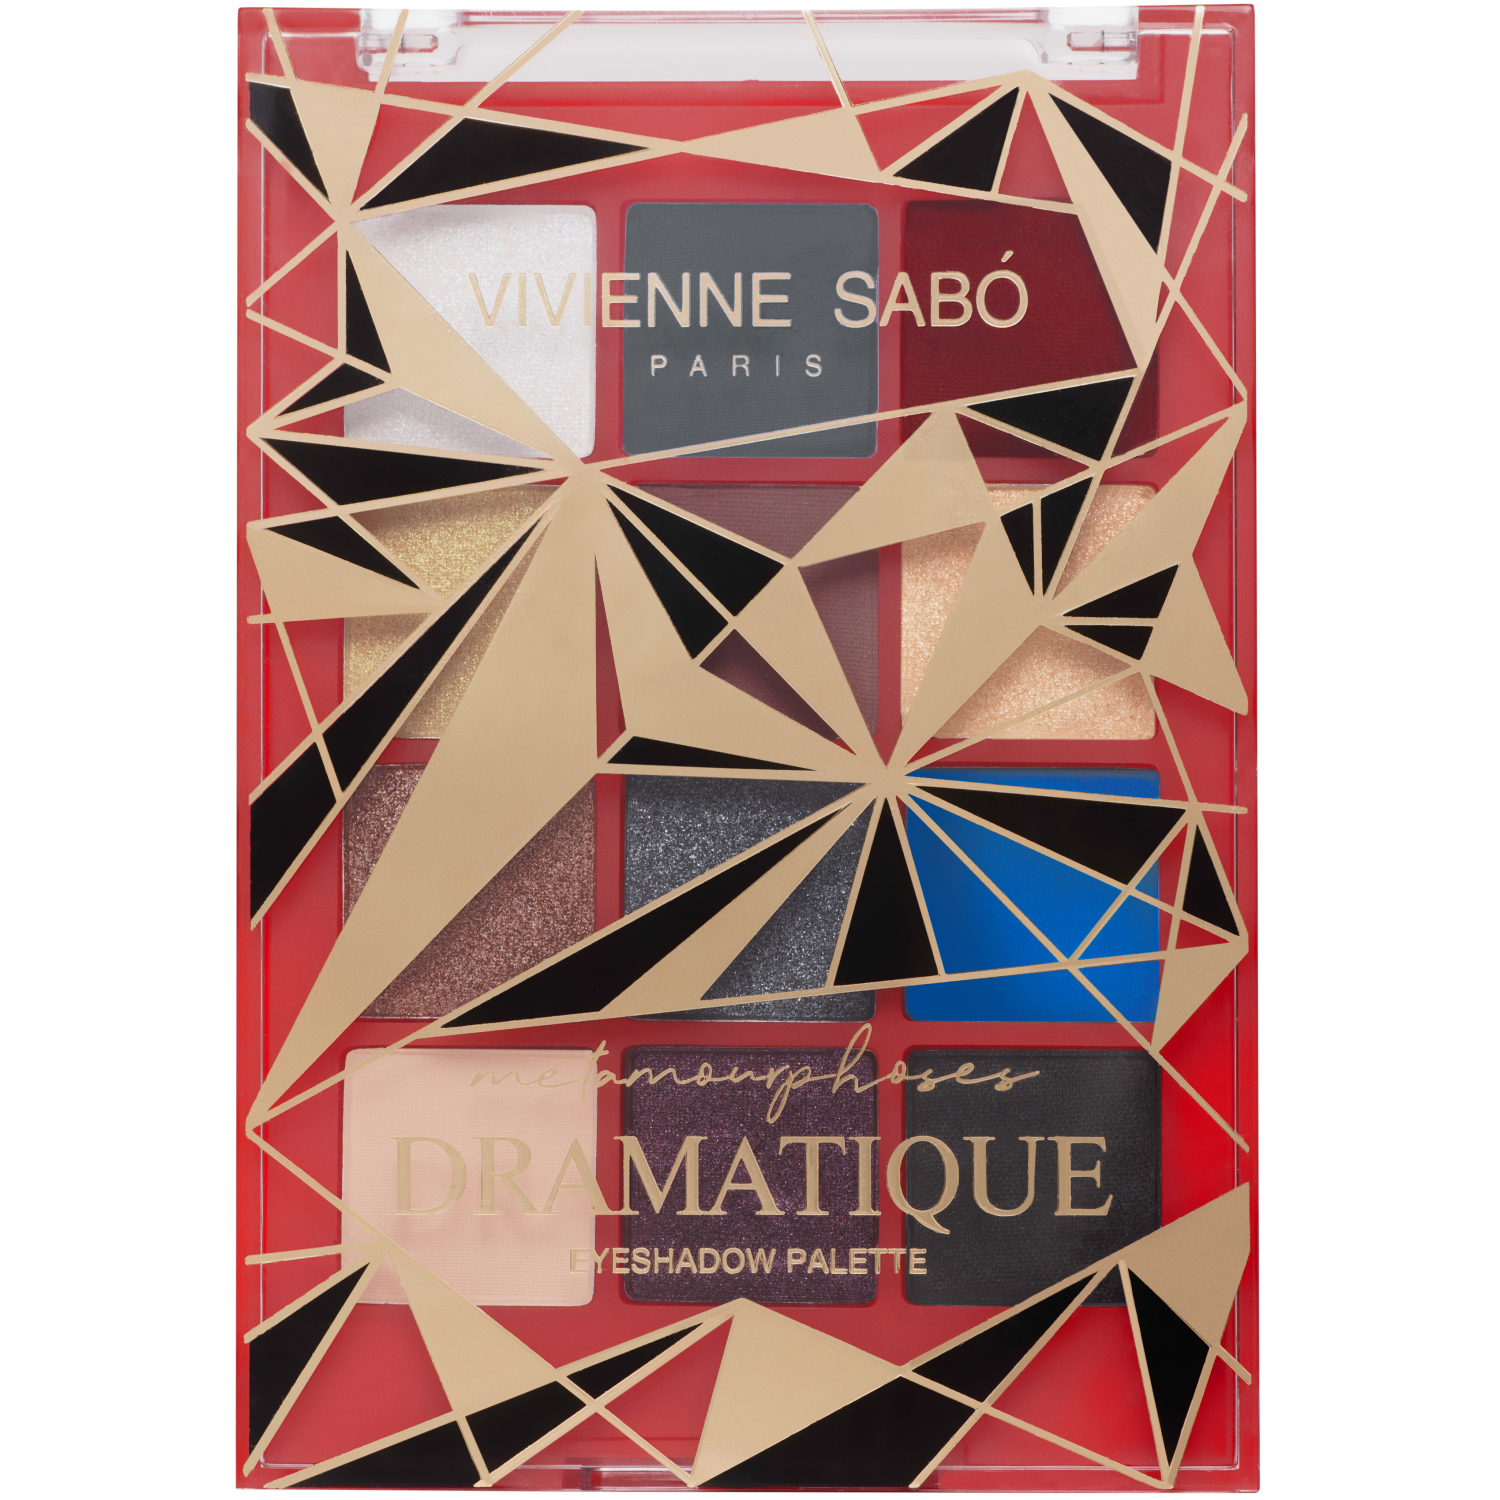 Палетка теней Vivienne Sabo Metamourphoses Dramatique 03 палетка теней для век с блестками 4 а